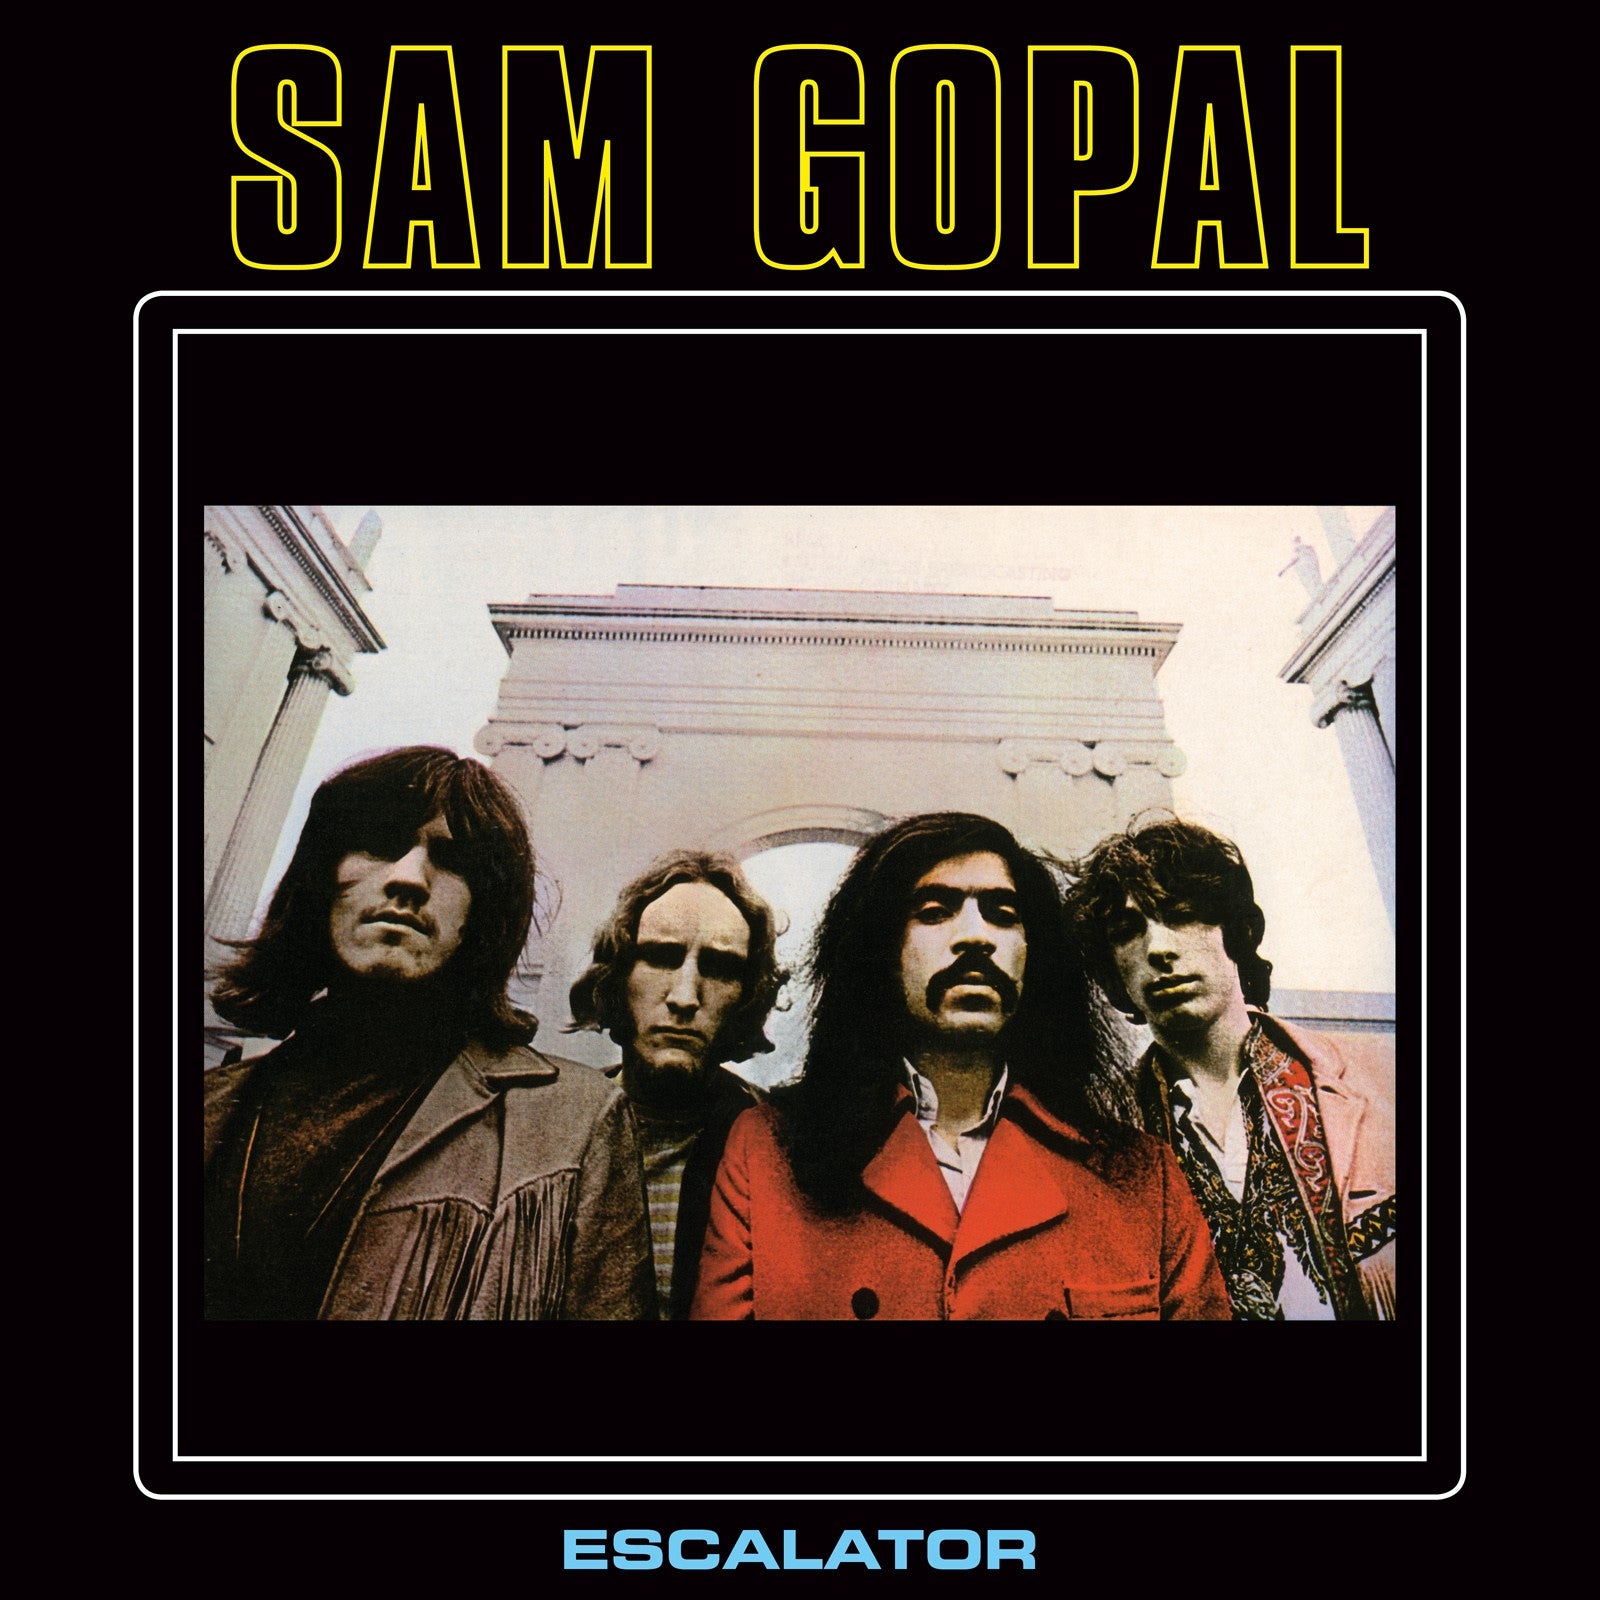 Sam Gopal - Escalator - CD Album & Vinyl LP+7" - Secret Records Limited